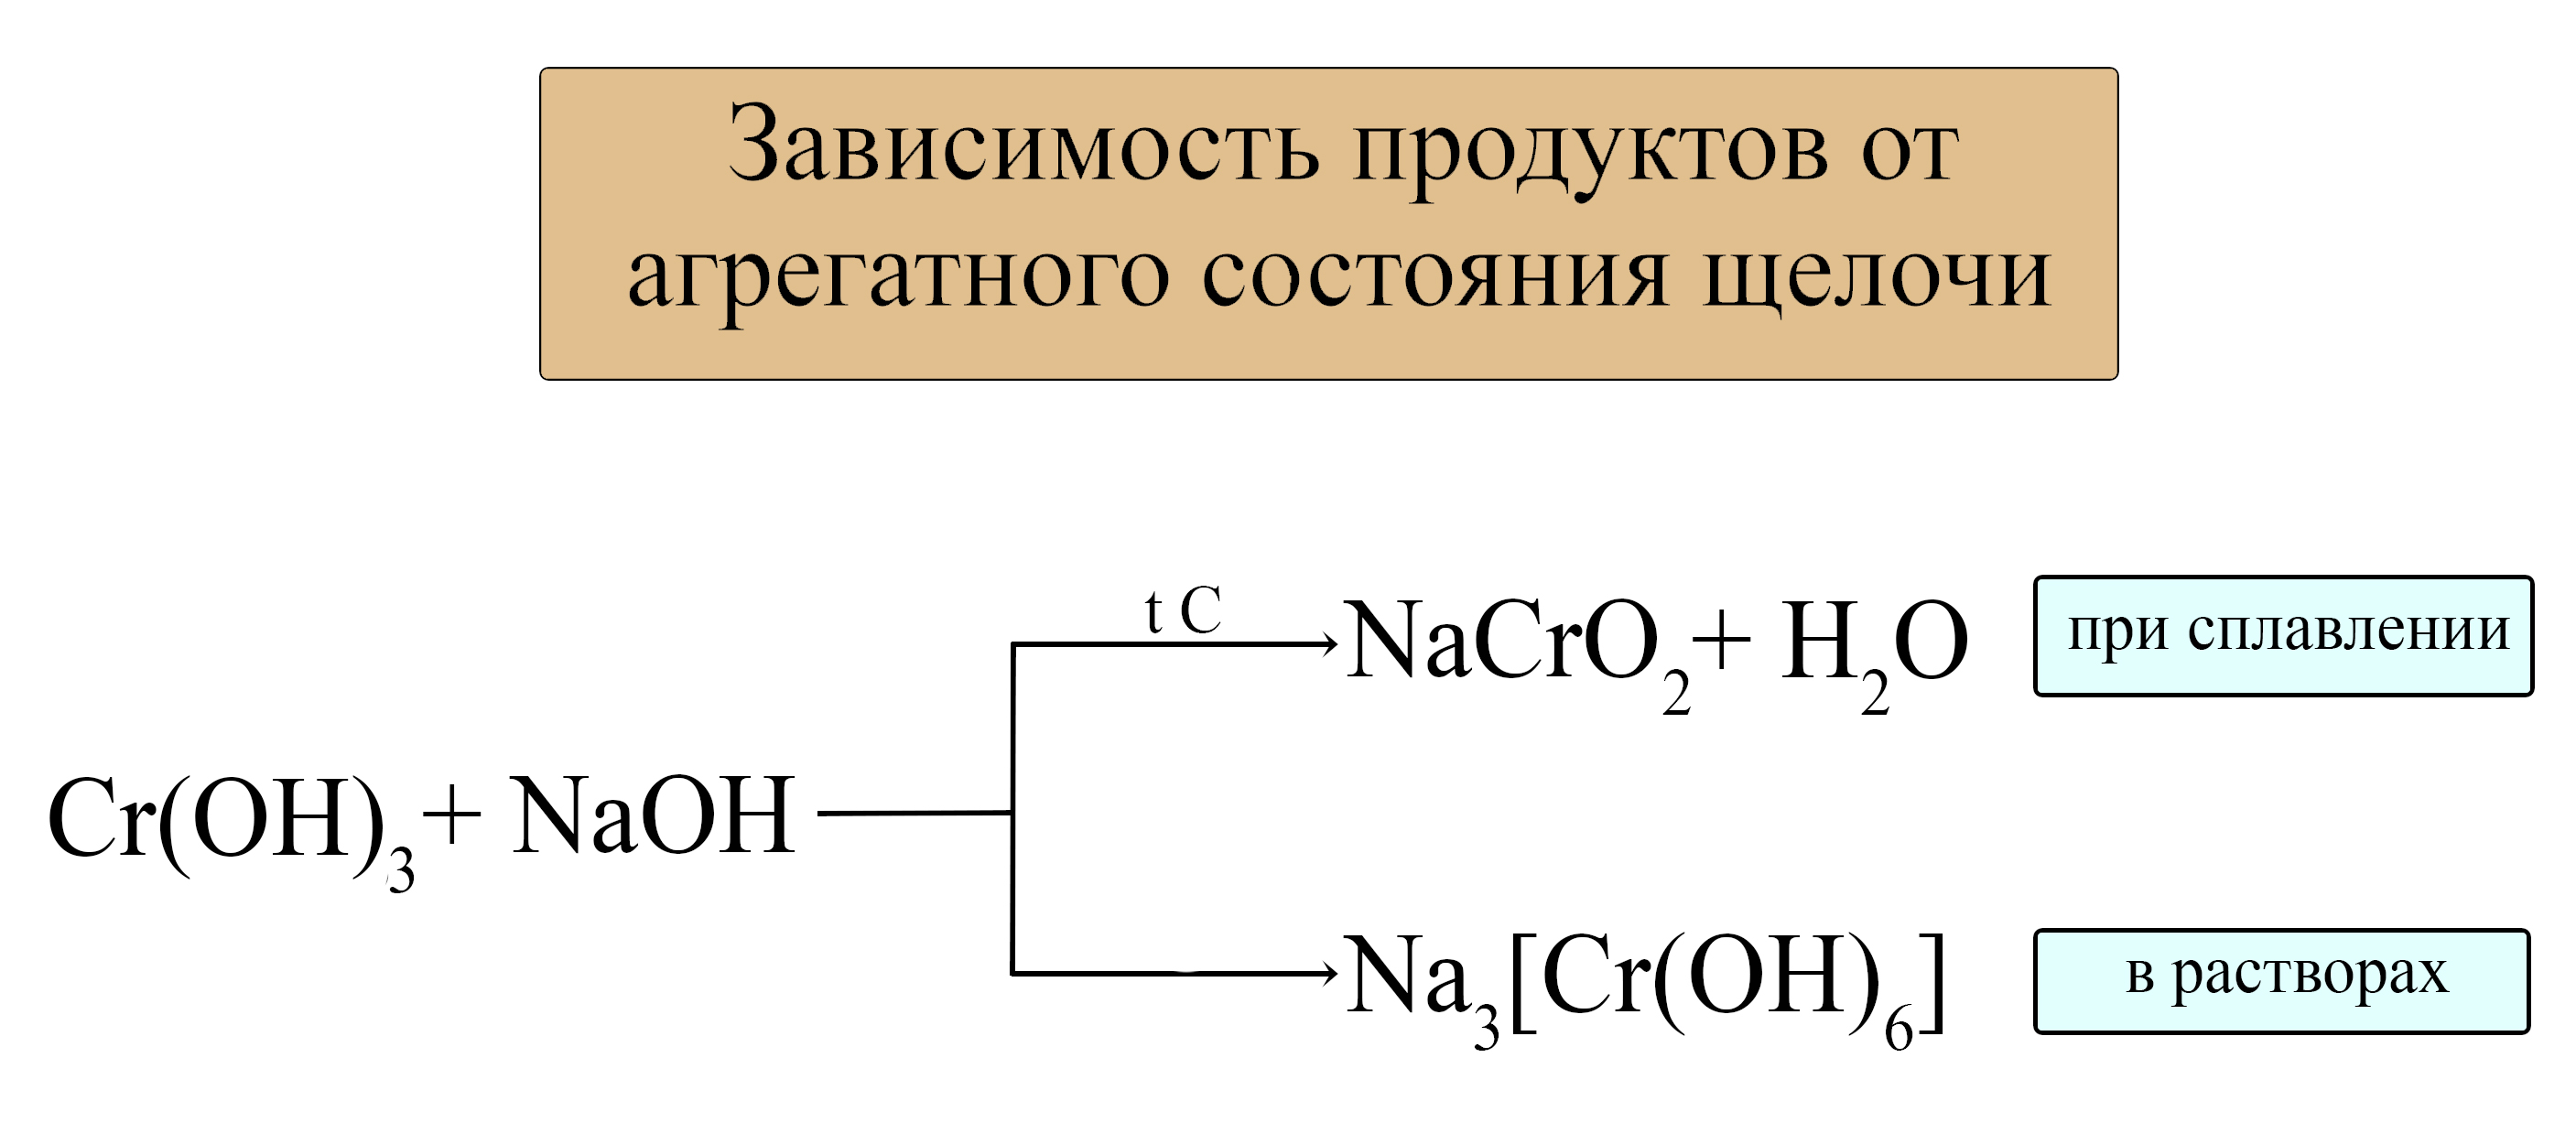 Амфотерный гидроксид хрома формула